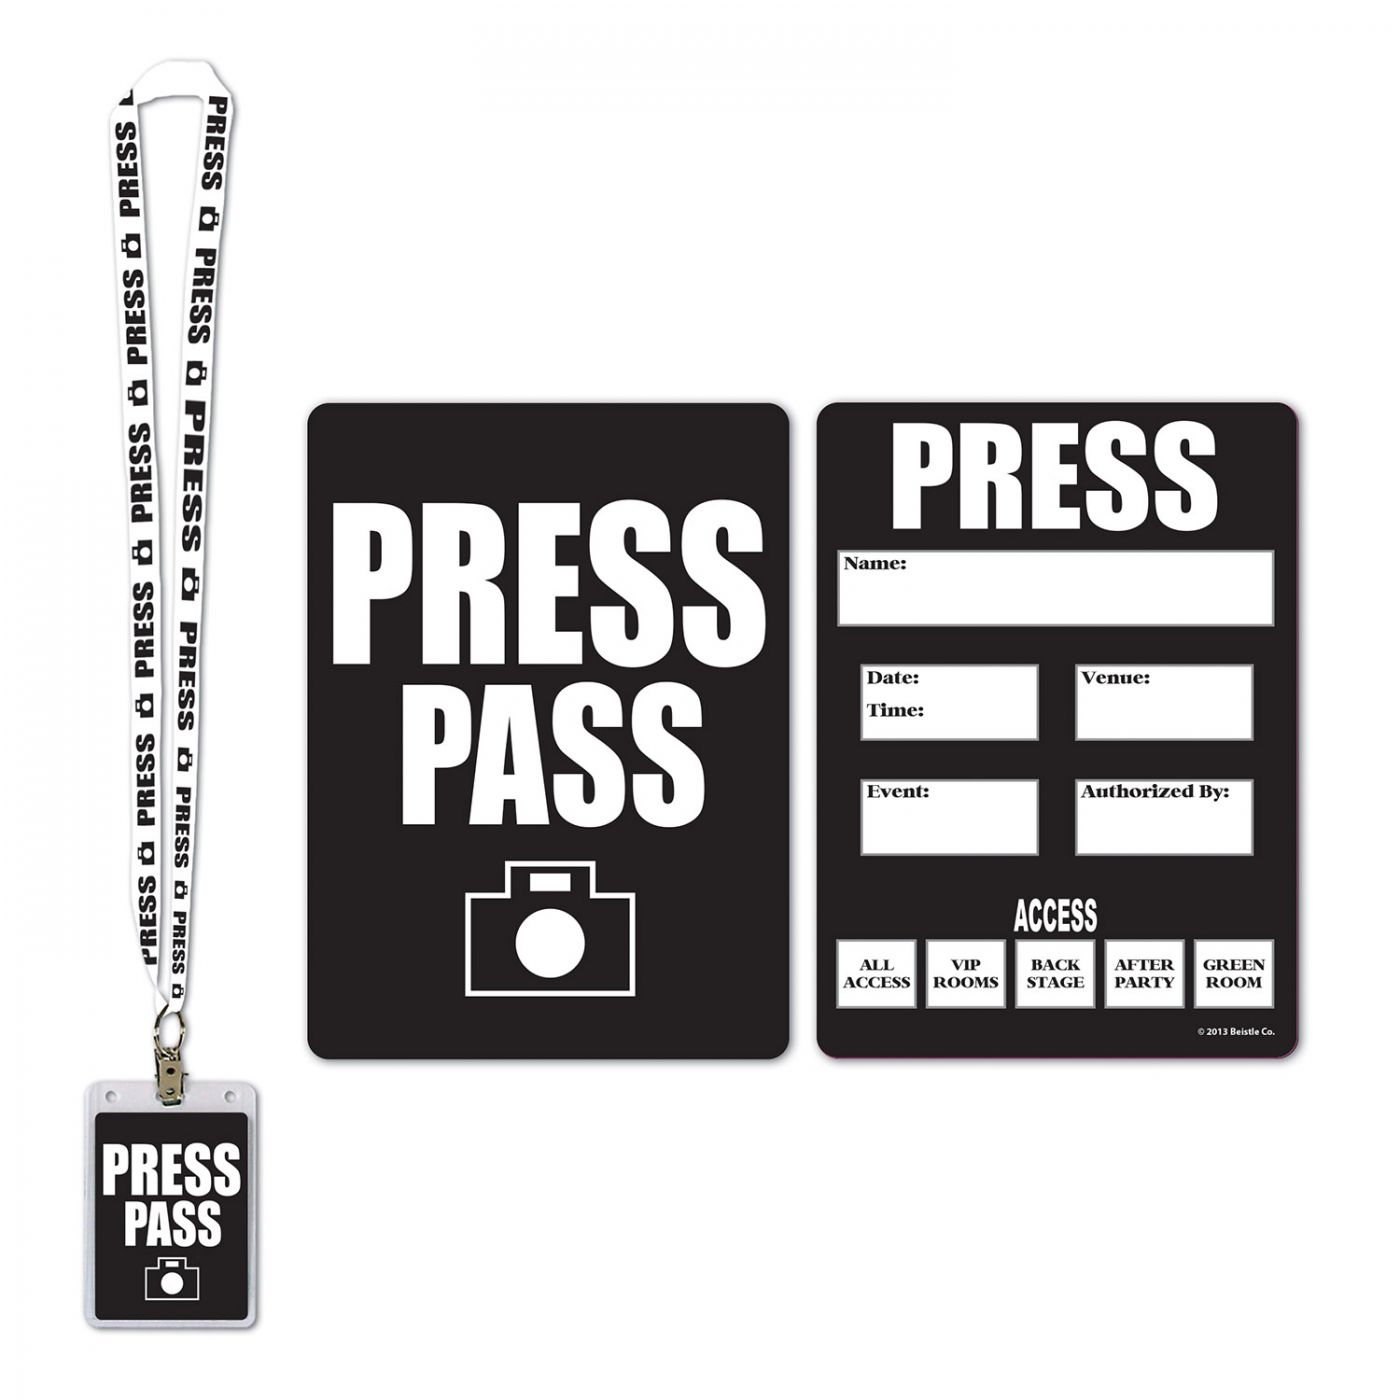 Press Party Pass image